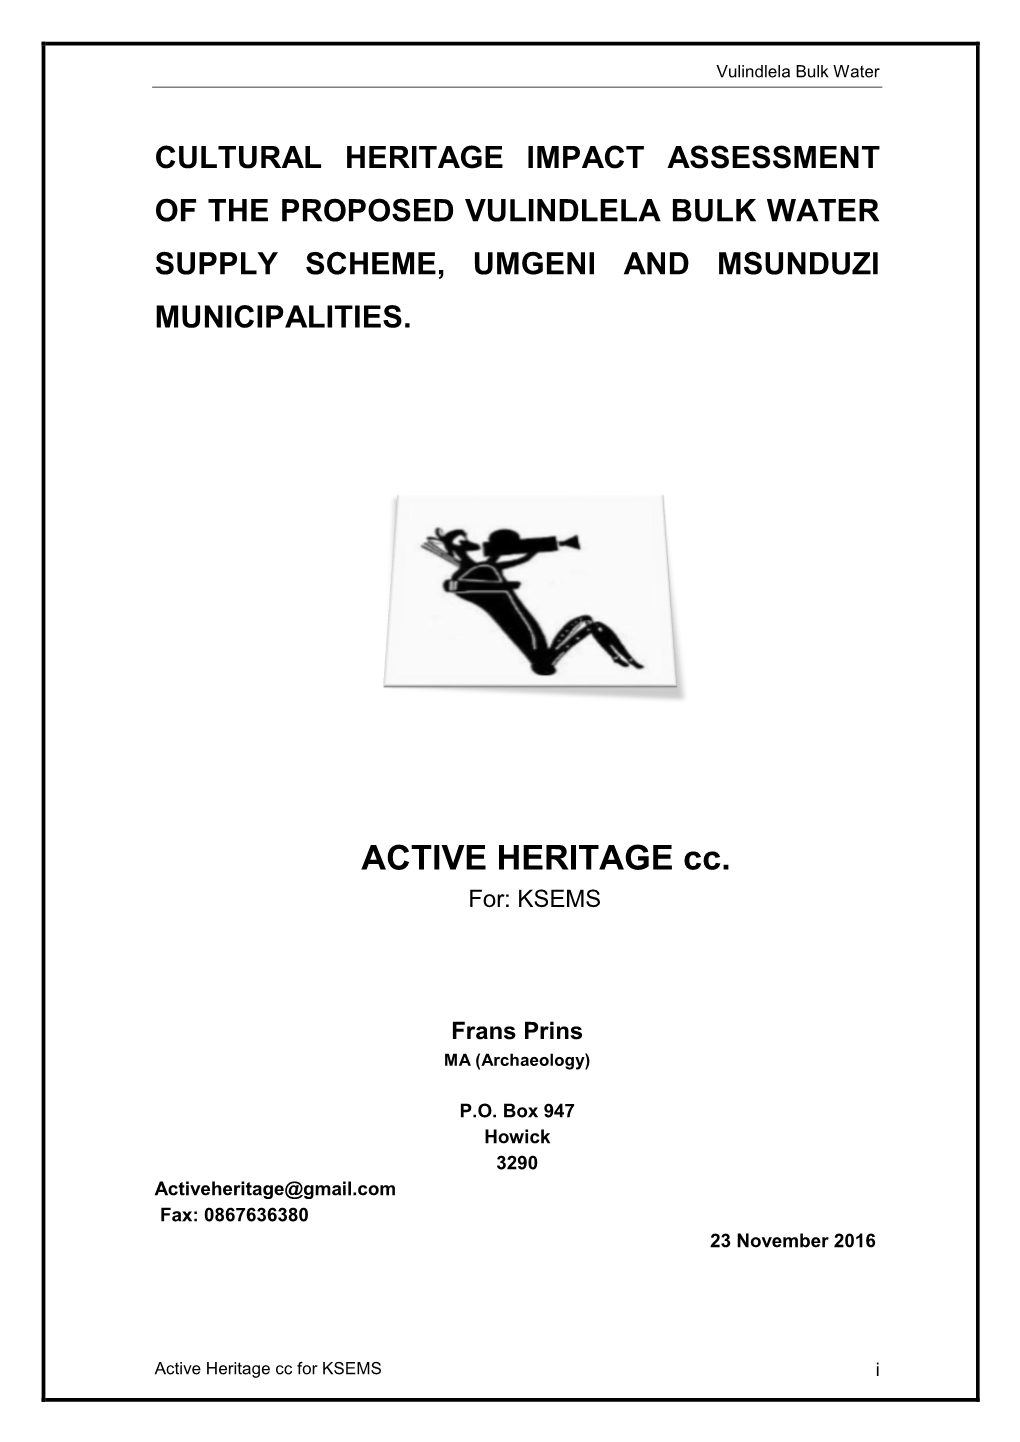 Cultural Heritage Impact Assessment of the Proposed Vulindlela Bulk Water Supply Scheme, Umgeni and Msunduzi Municipalities